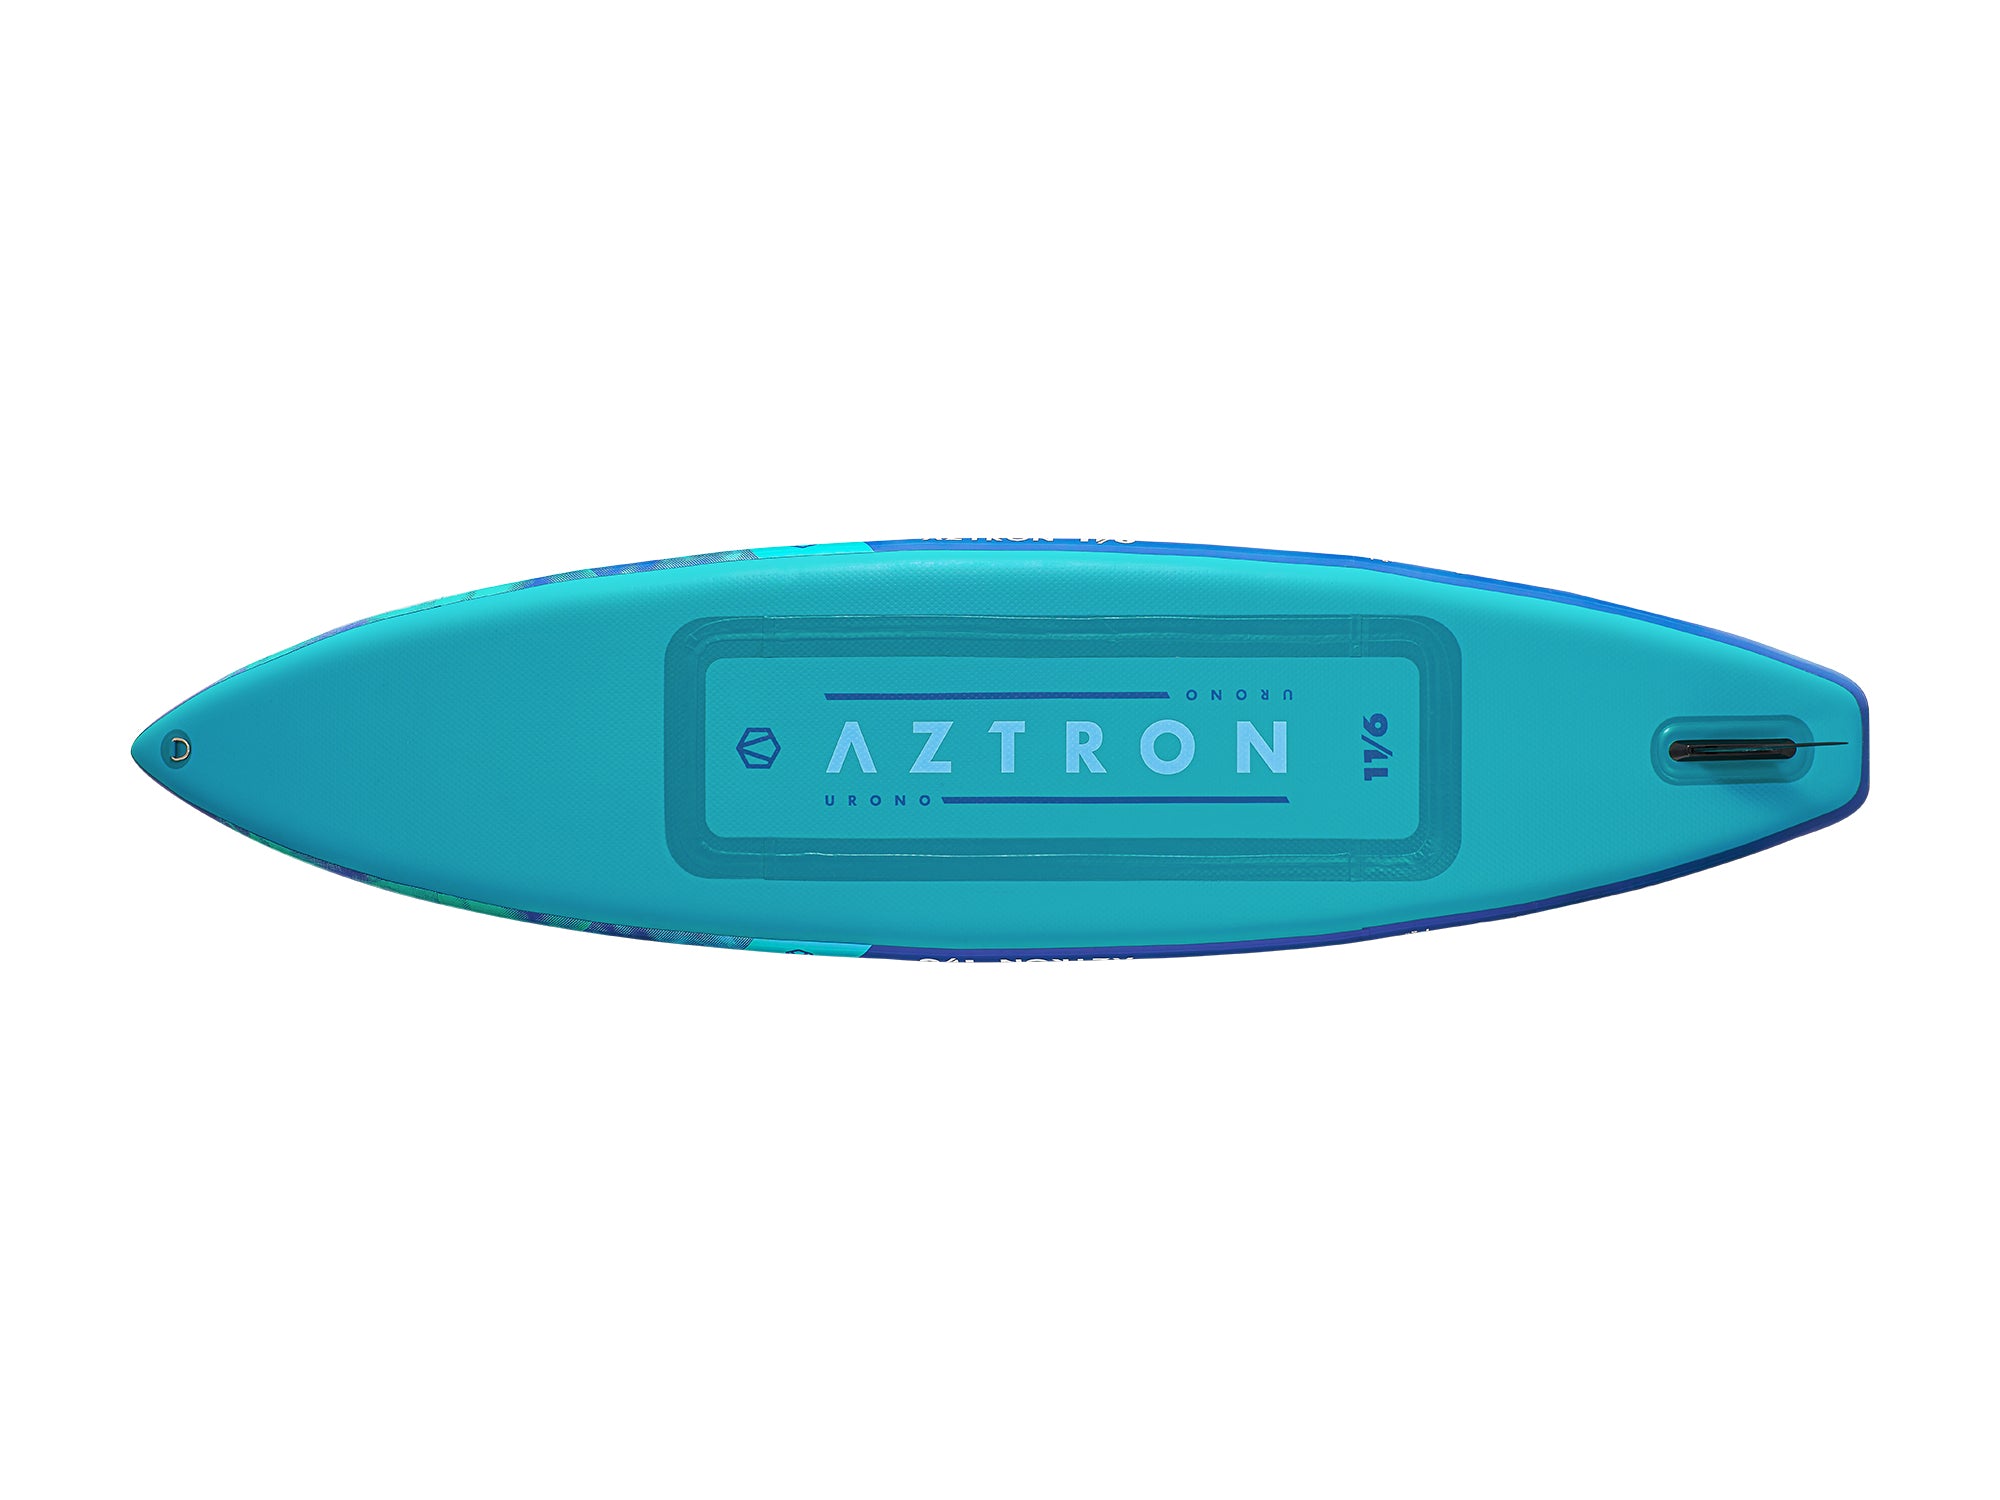 AZTRON Urono Touring 11'6" iSUP Set, 350x81x15cm, volume 306L